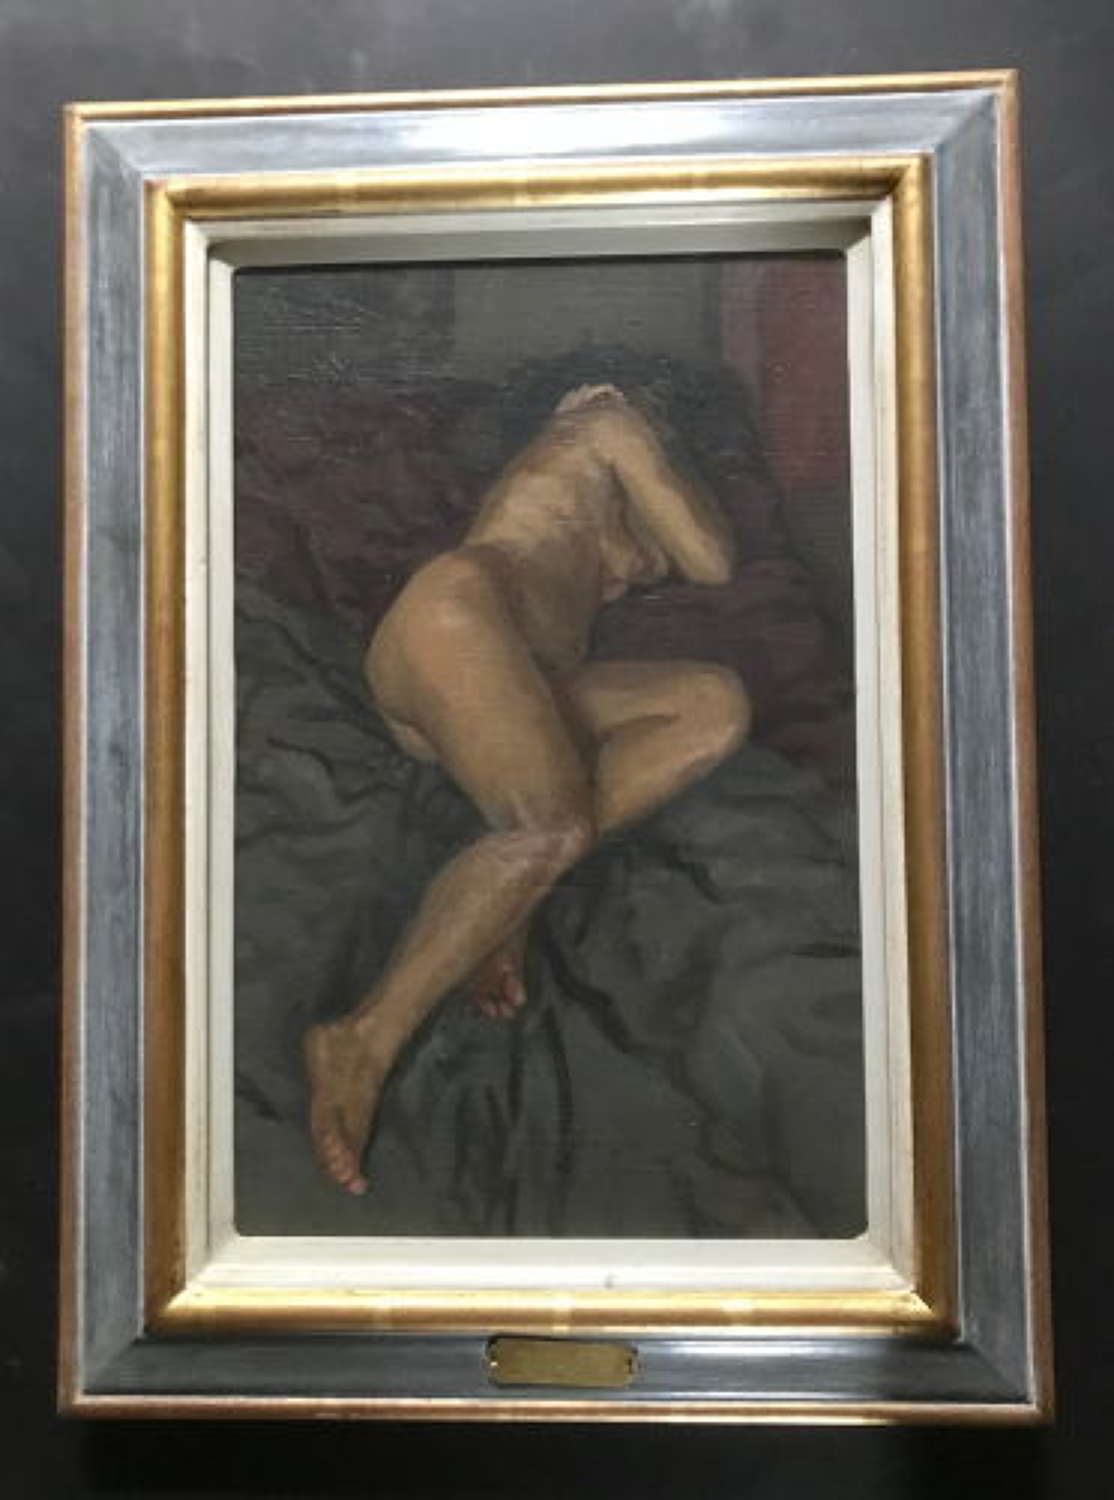 Michael Corkrey - Oil On Canvas - Nude